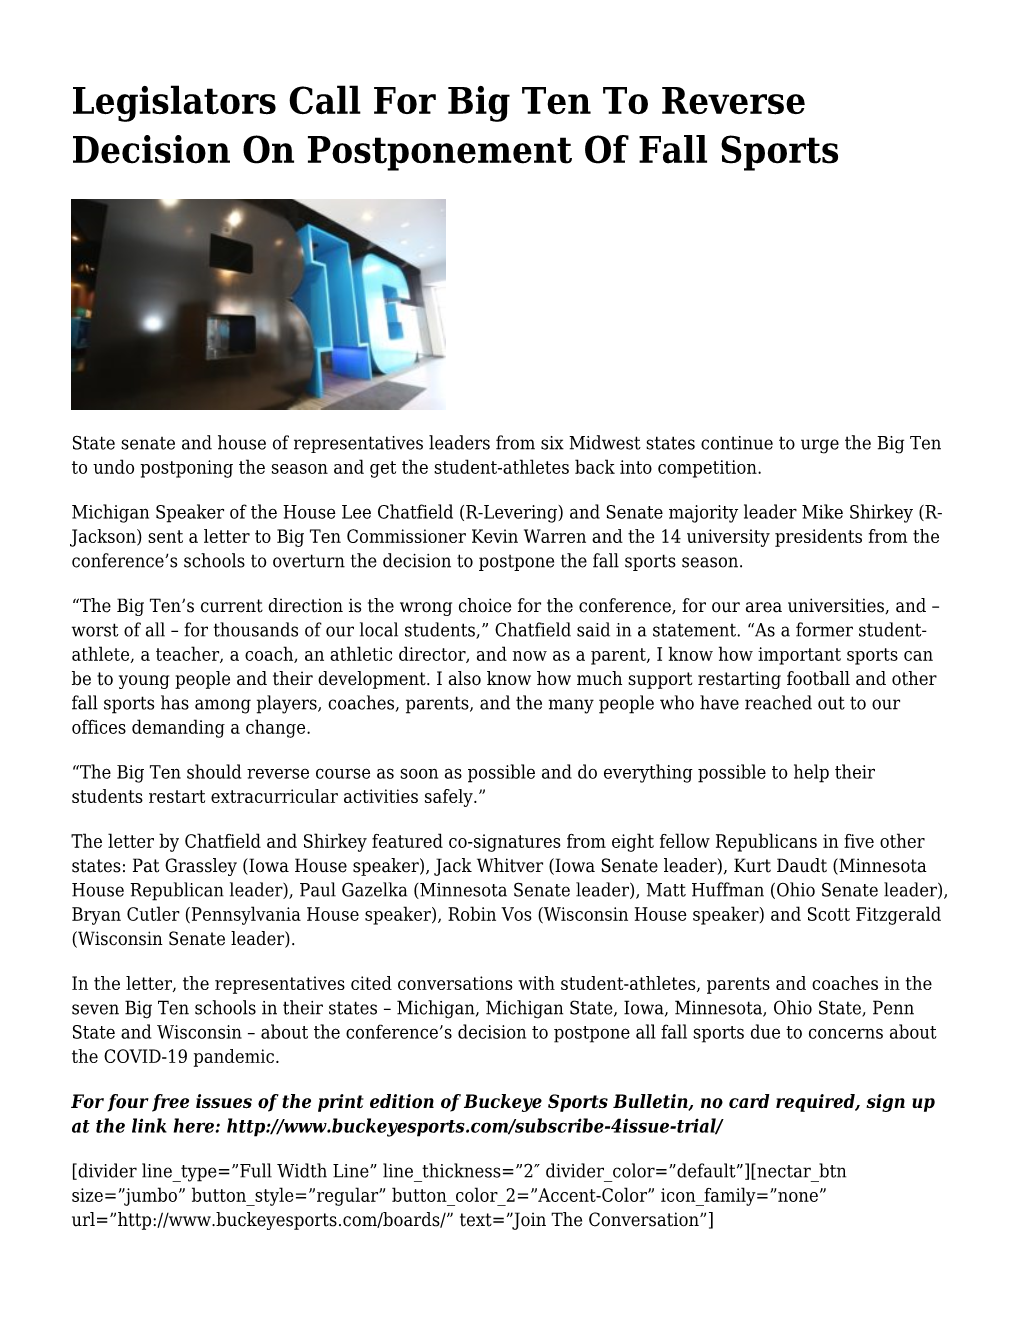 Legislators Call for Big Ten to Reverse Decision on Postponement of Fall Sports